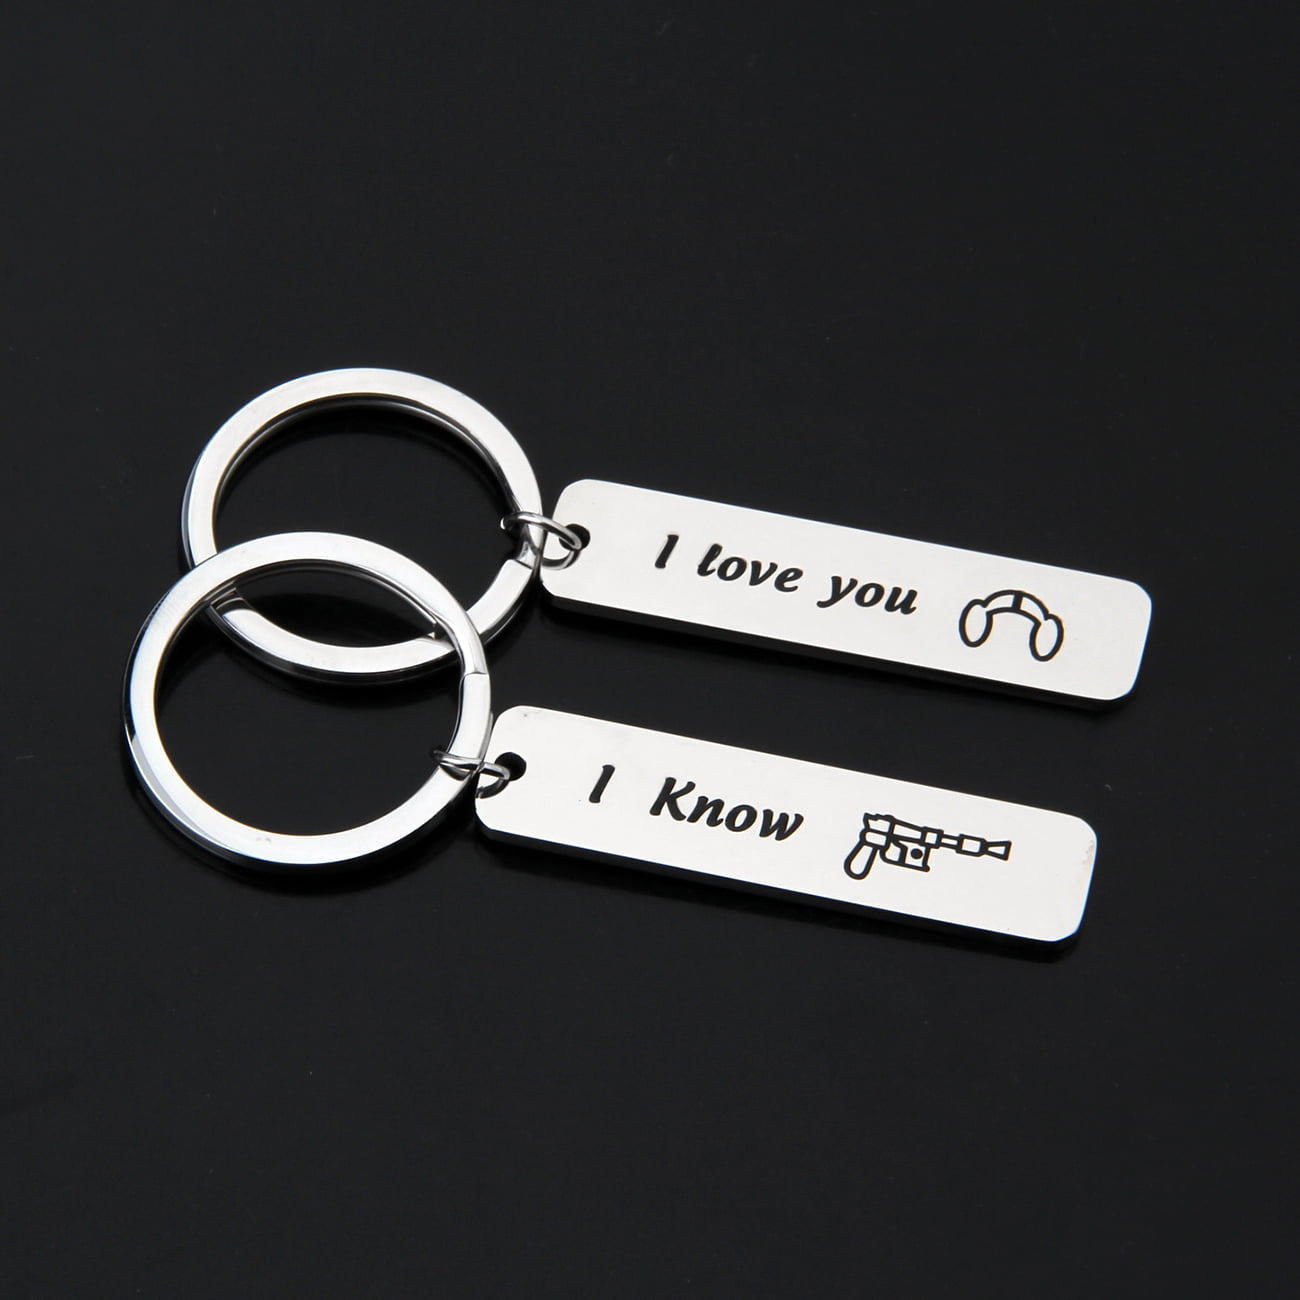 Star Wars Gift TGBJE I Love You I Know Keychain Set Couple Keychain